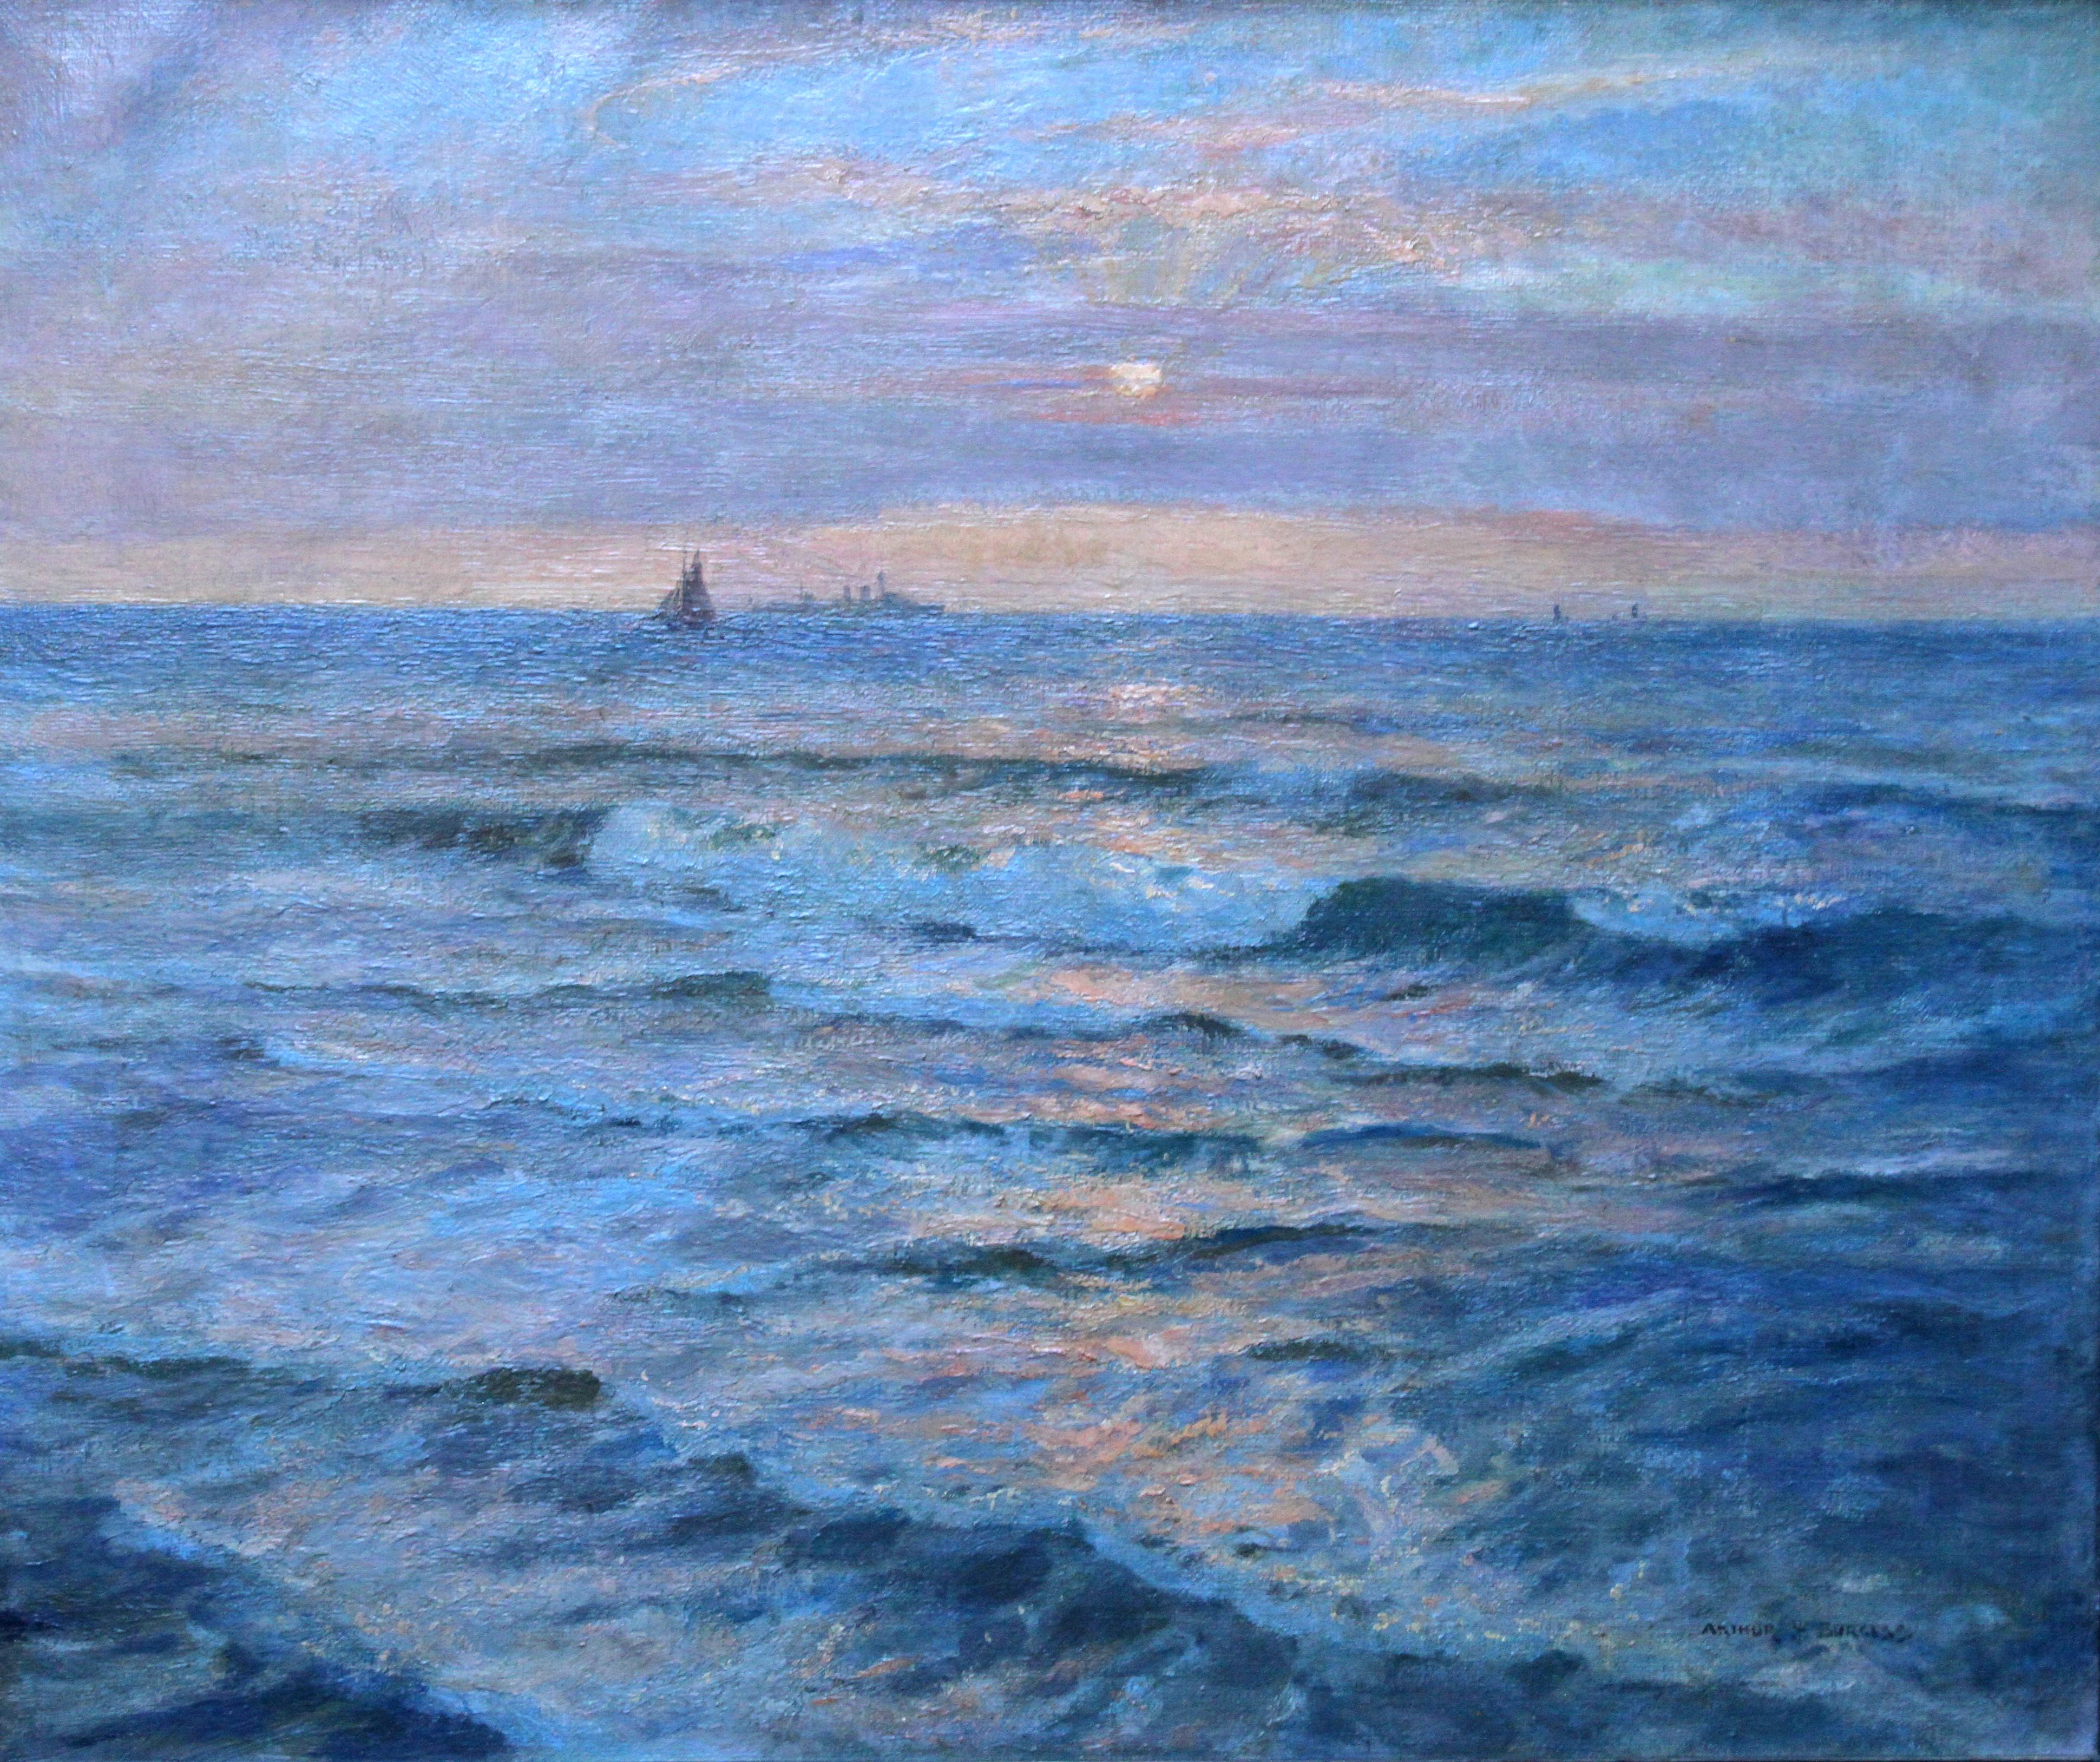 Sunset Seascape - Australian art Victorian Impressionist marine oil painting - Painting by Arthur James Wetherall Burgess